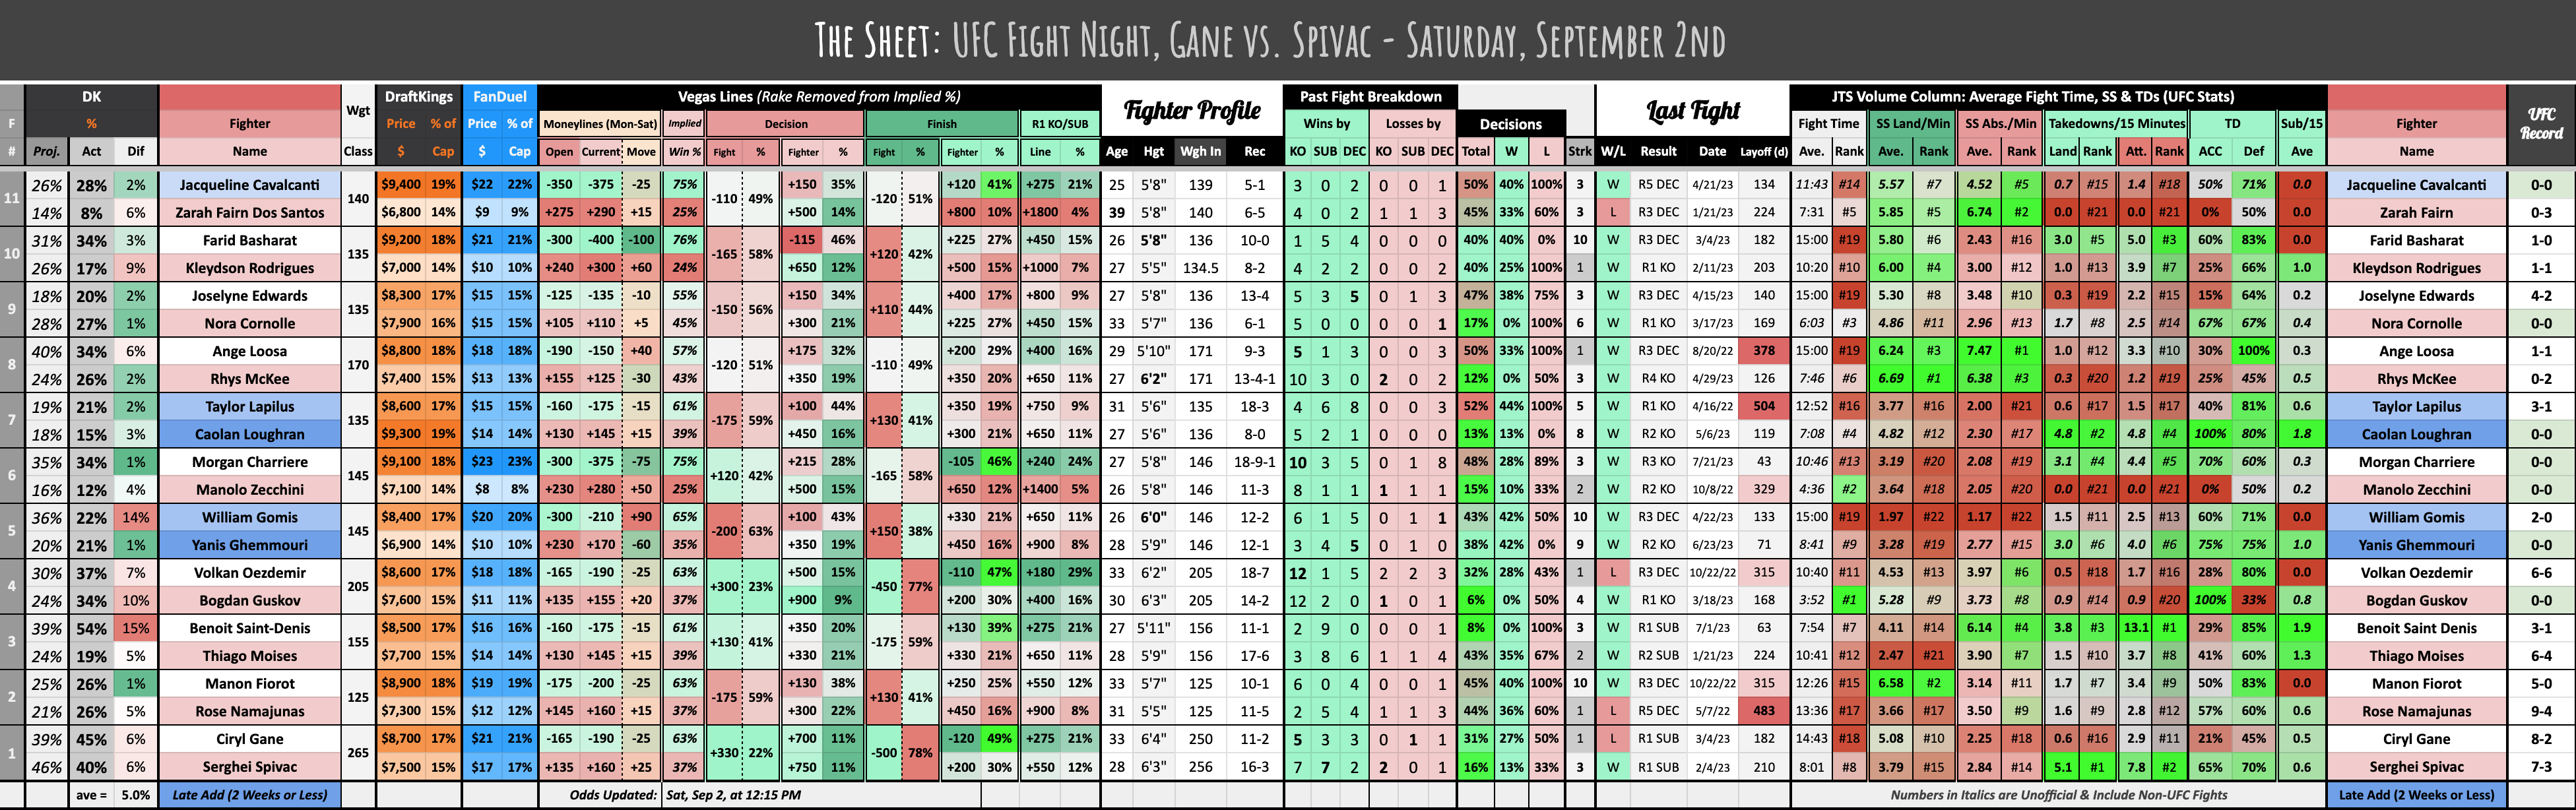 UFC Fight Night, Gane vs. Spivac - Saturday, September 2nd